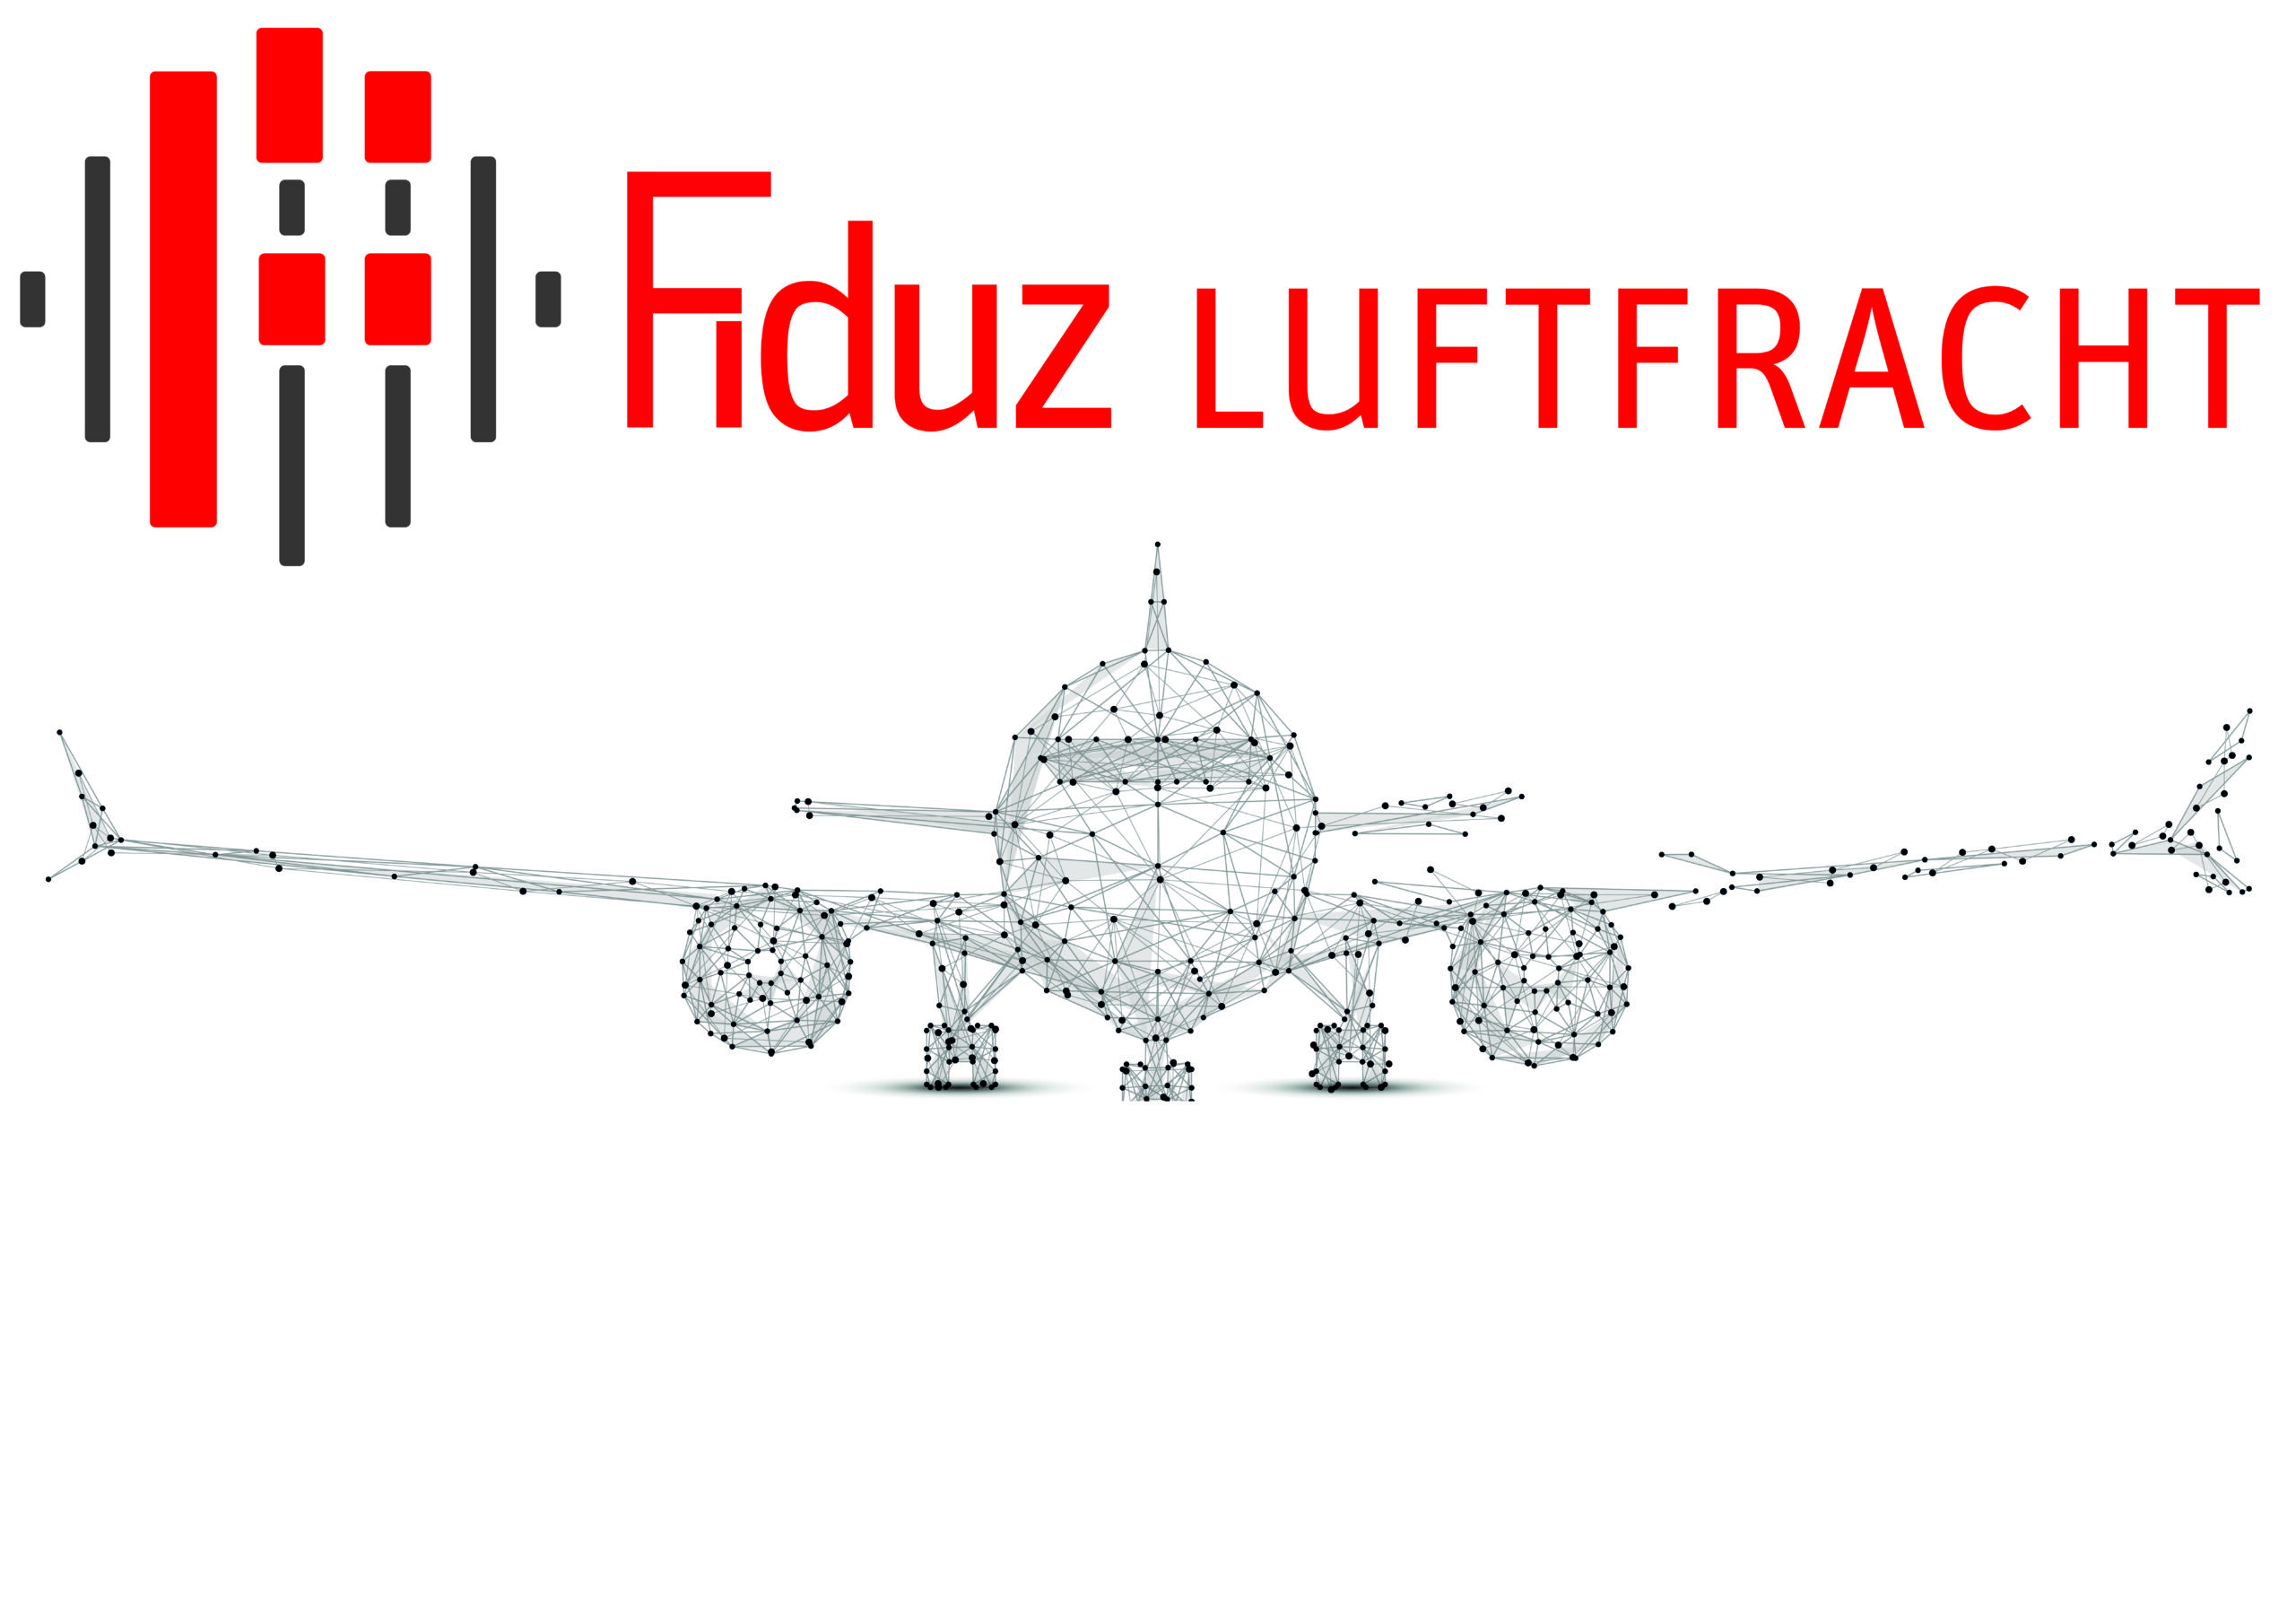 Fiduz Transport Management 2